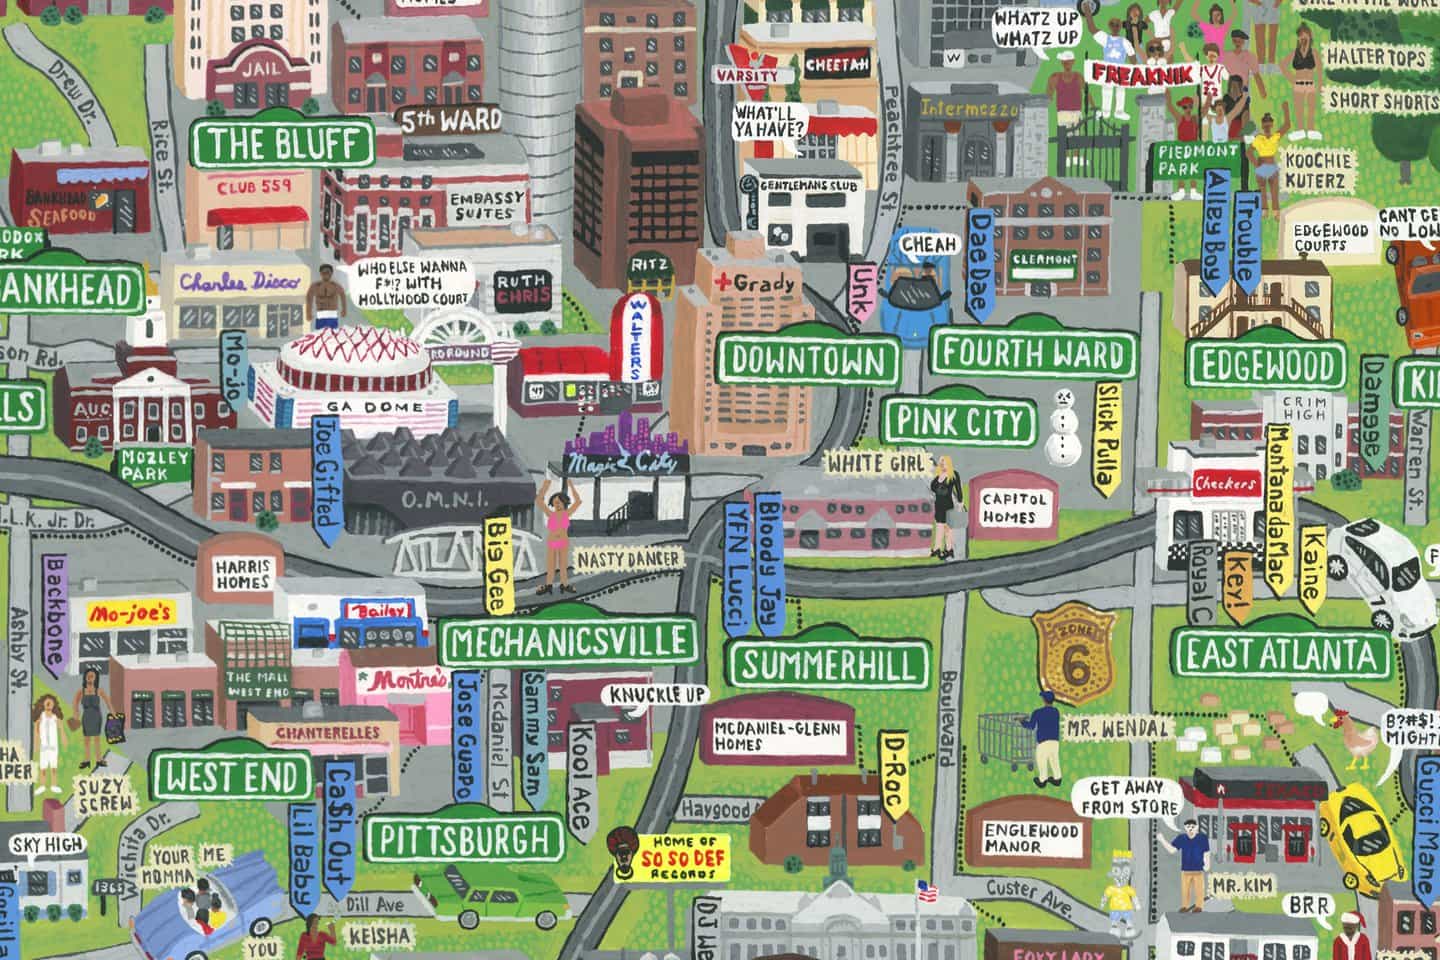 Veazey Studio: Detalle del mapa de rap de Atlanta (Copyright © Veazey Studio, 2021)